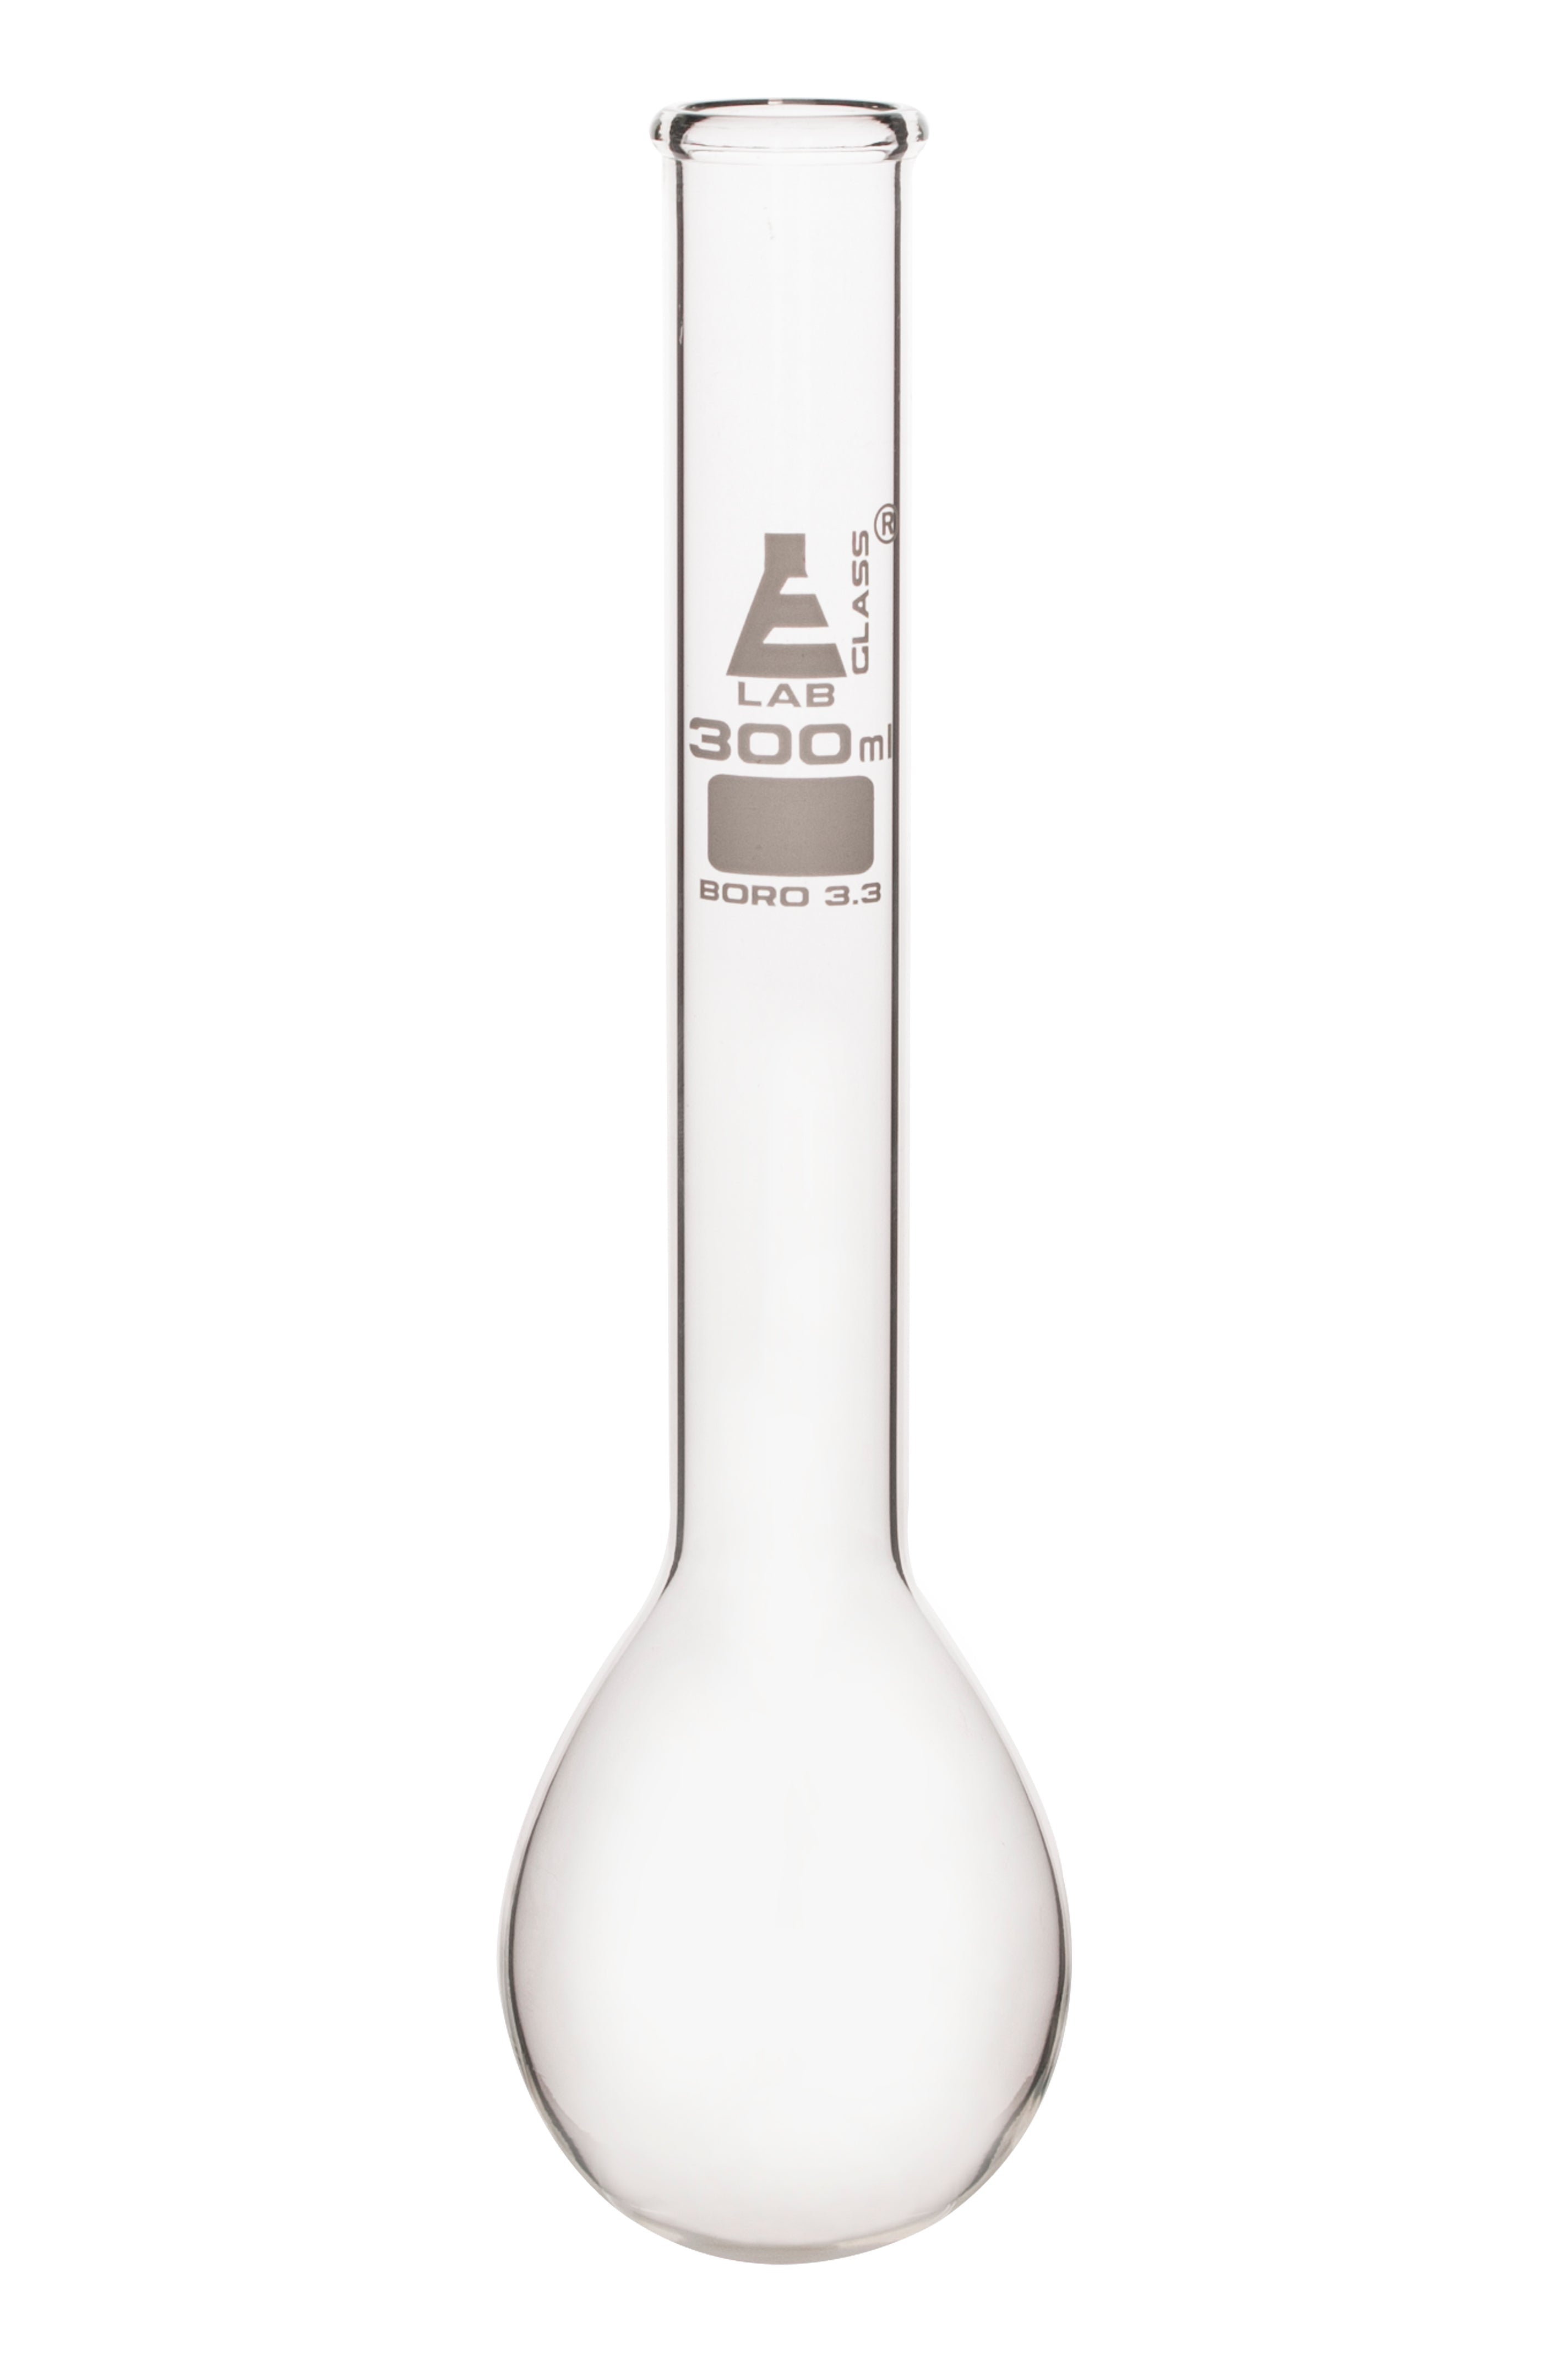 Borosilicate Kjeldahl Flask with Beaded Rim, 300 ml, Autoclavable